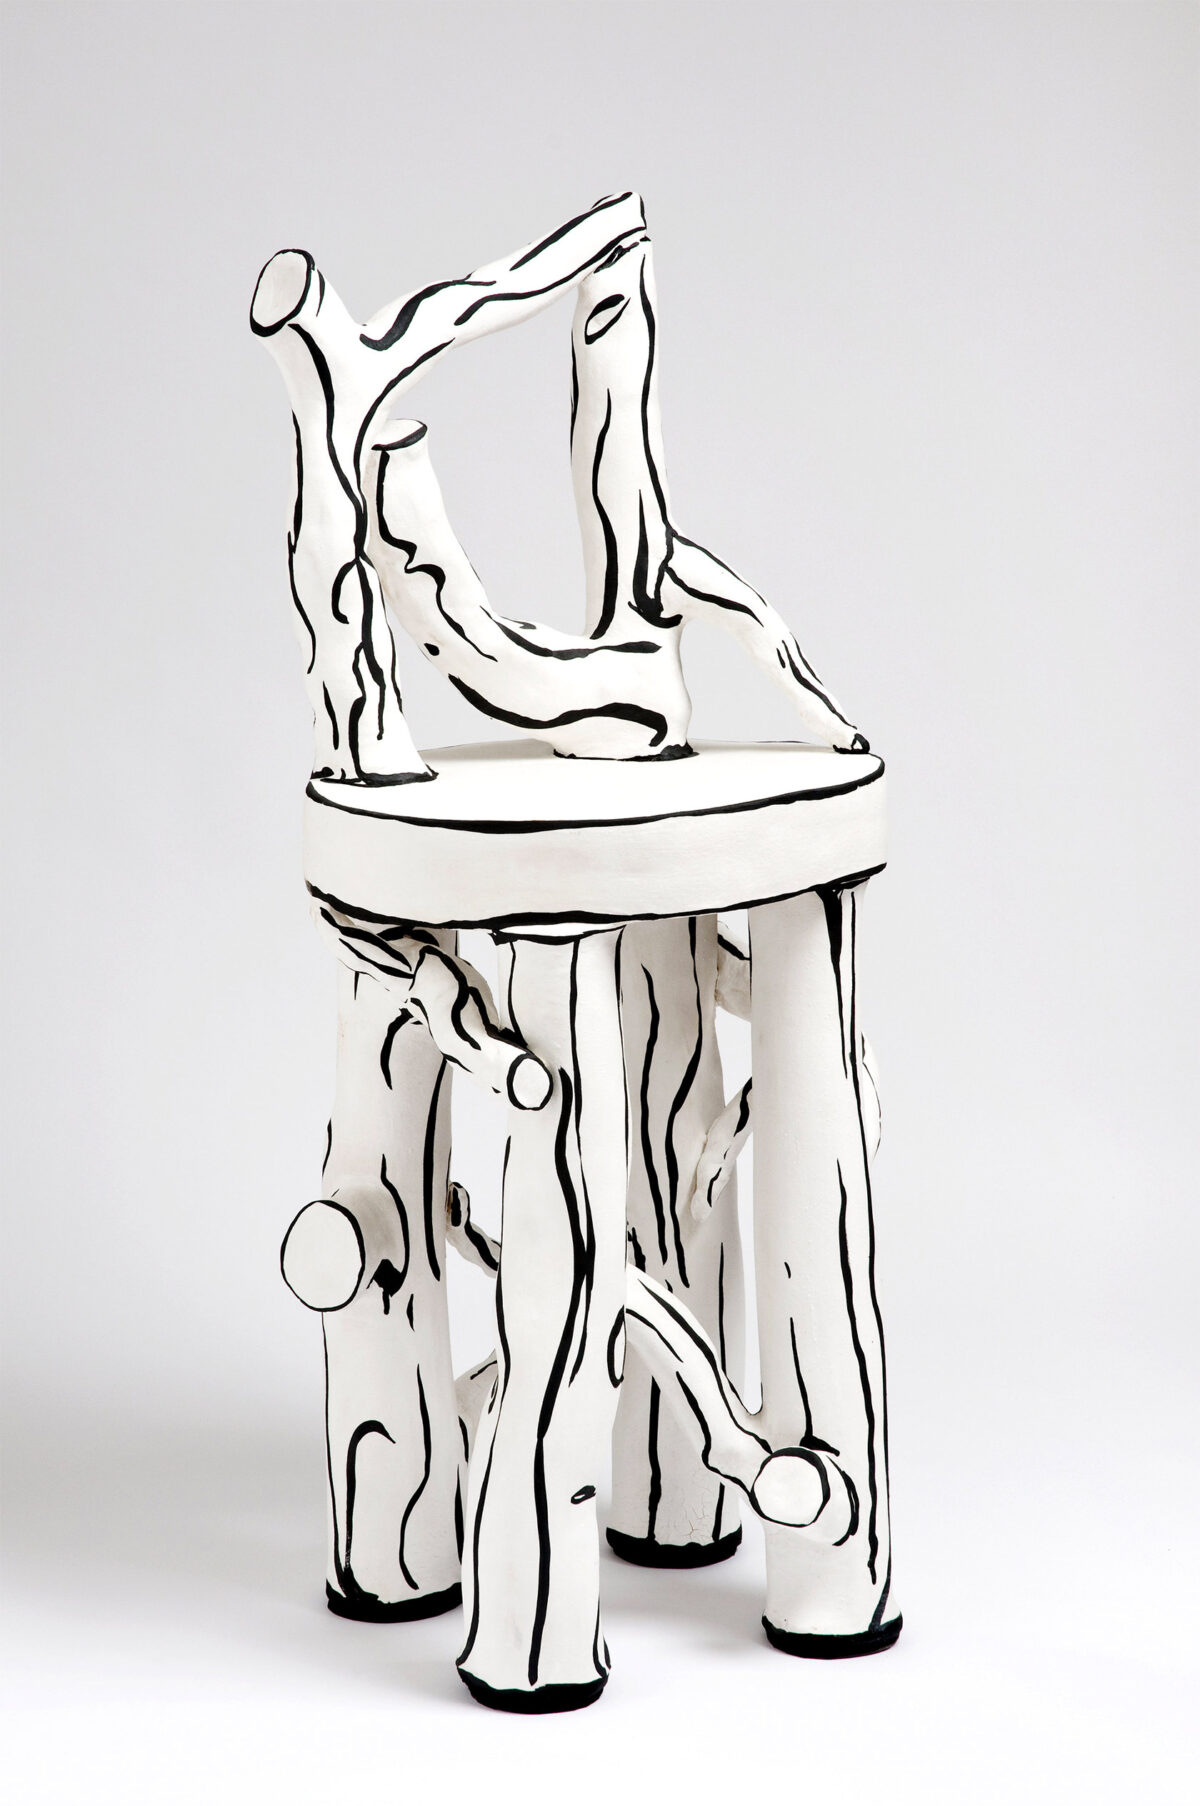 Porcelain Drawings Striking Ceramic Sculptures By Katharine Morling (19)